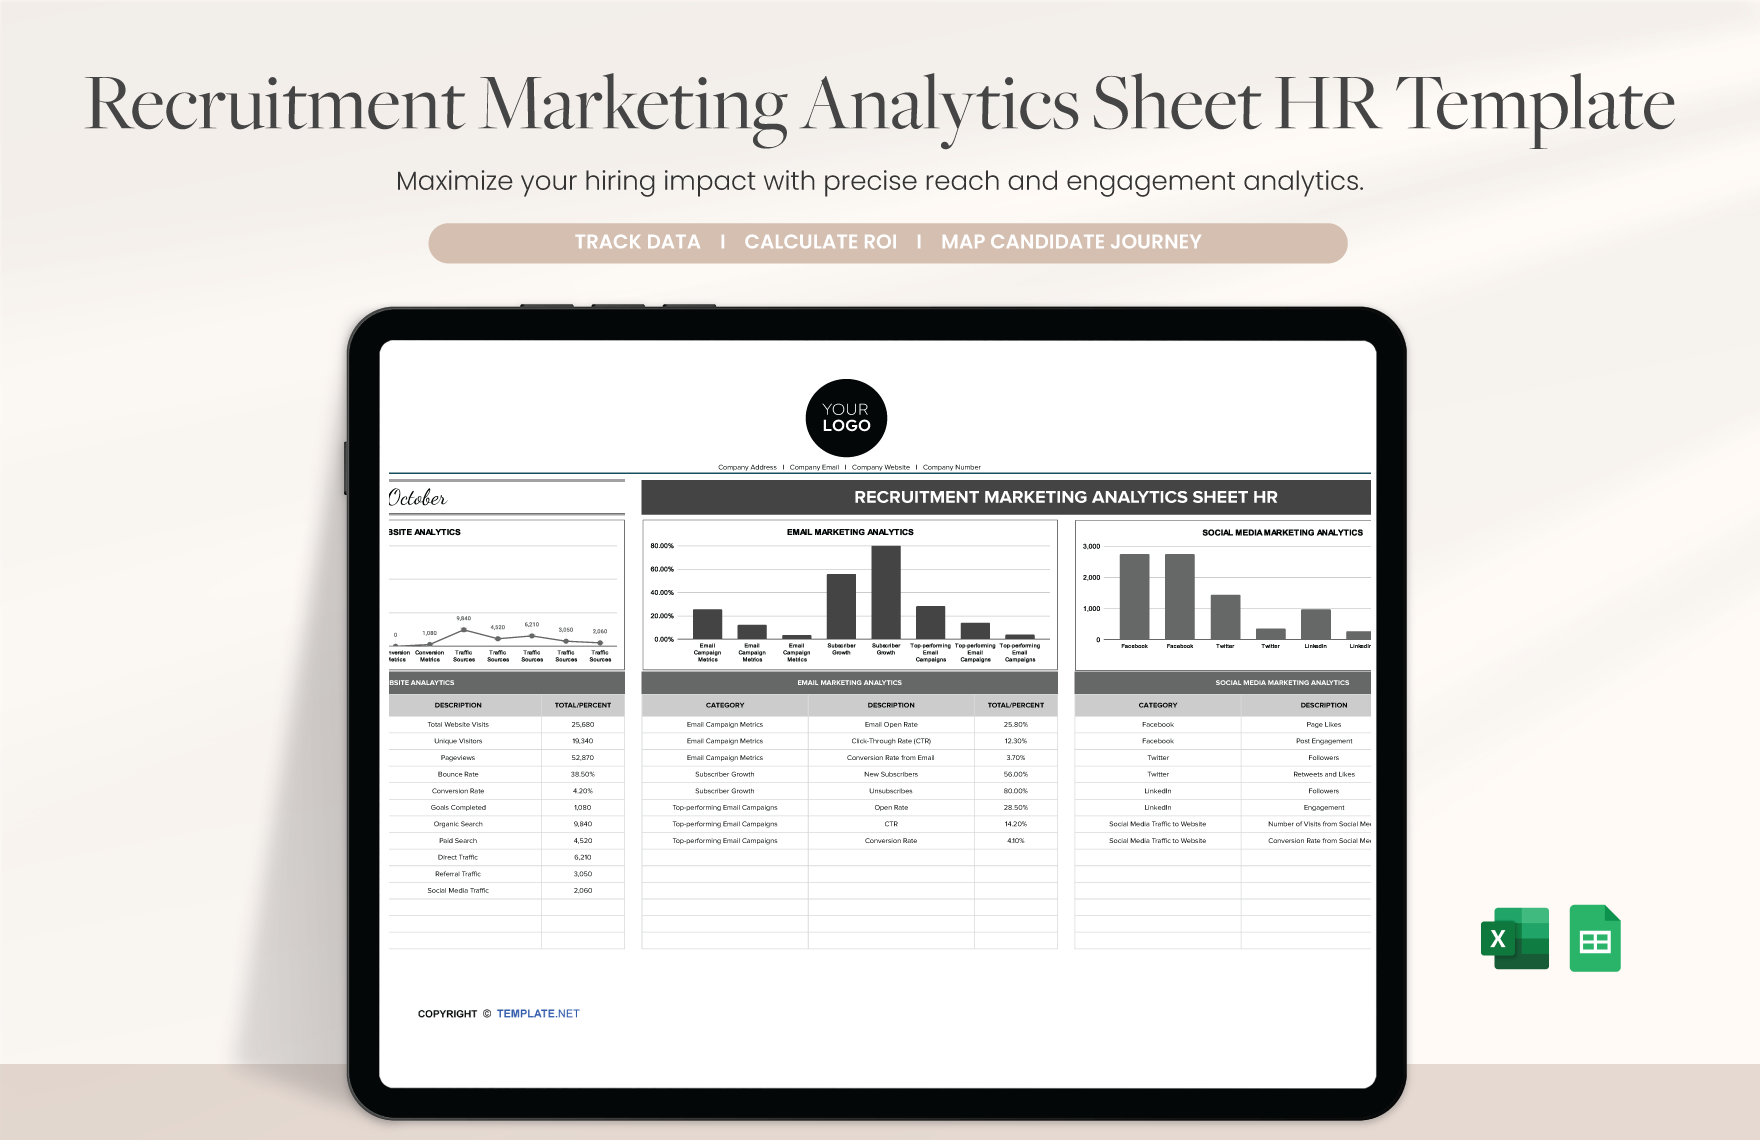 Recruitment Marketing Analytics Sheet HR Template